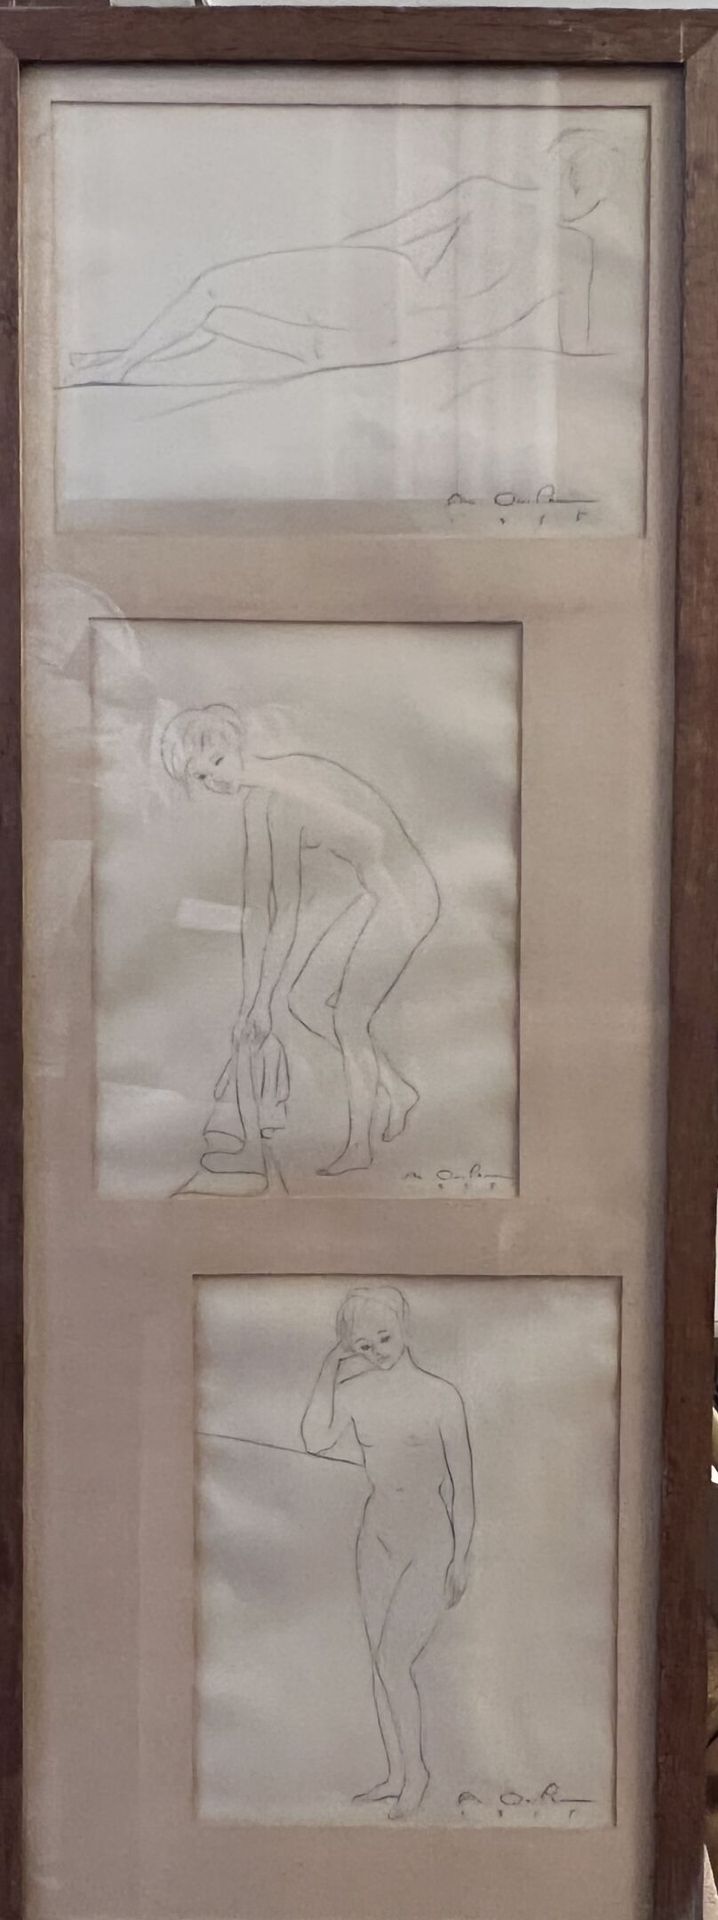 Null OUILEM

在同一框架内的三幅裸体研究。

有签名和日期的1955年。

77 x 29 厘米